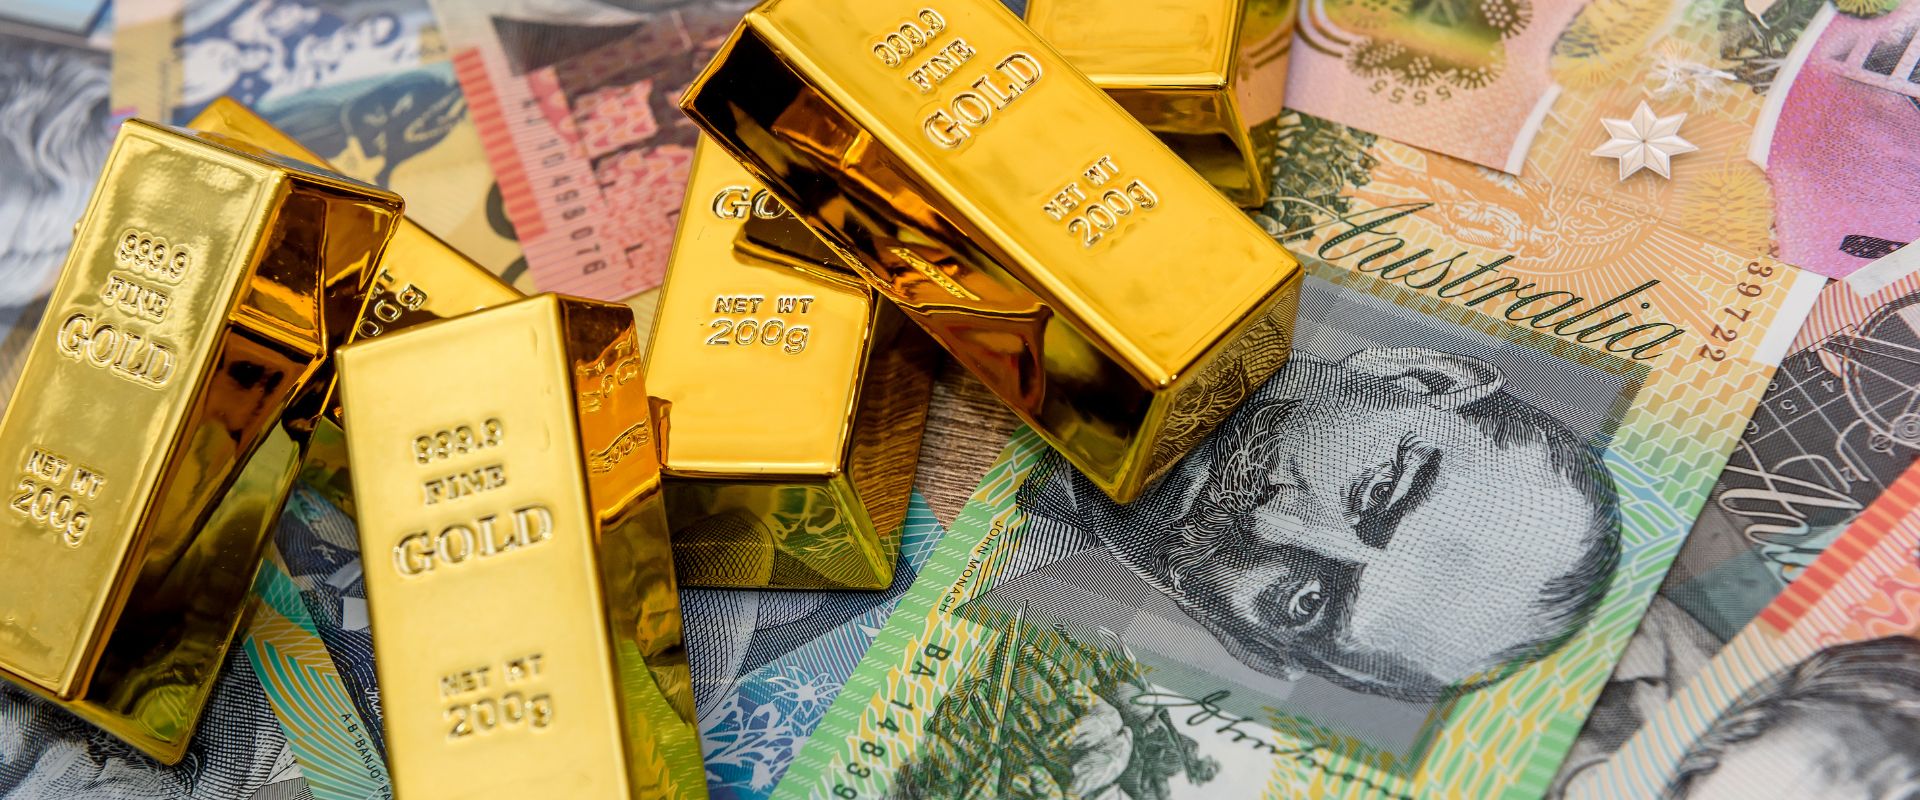 australian dollar banknotes as gold bar background